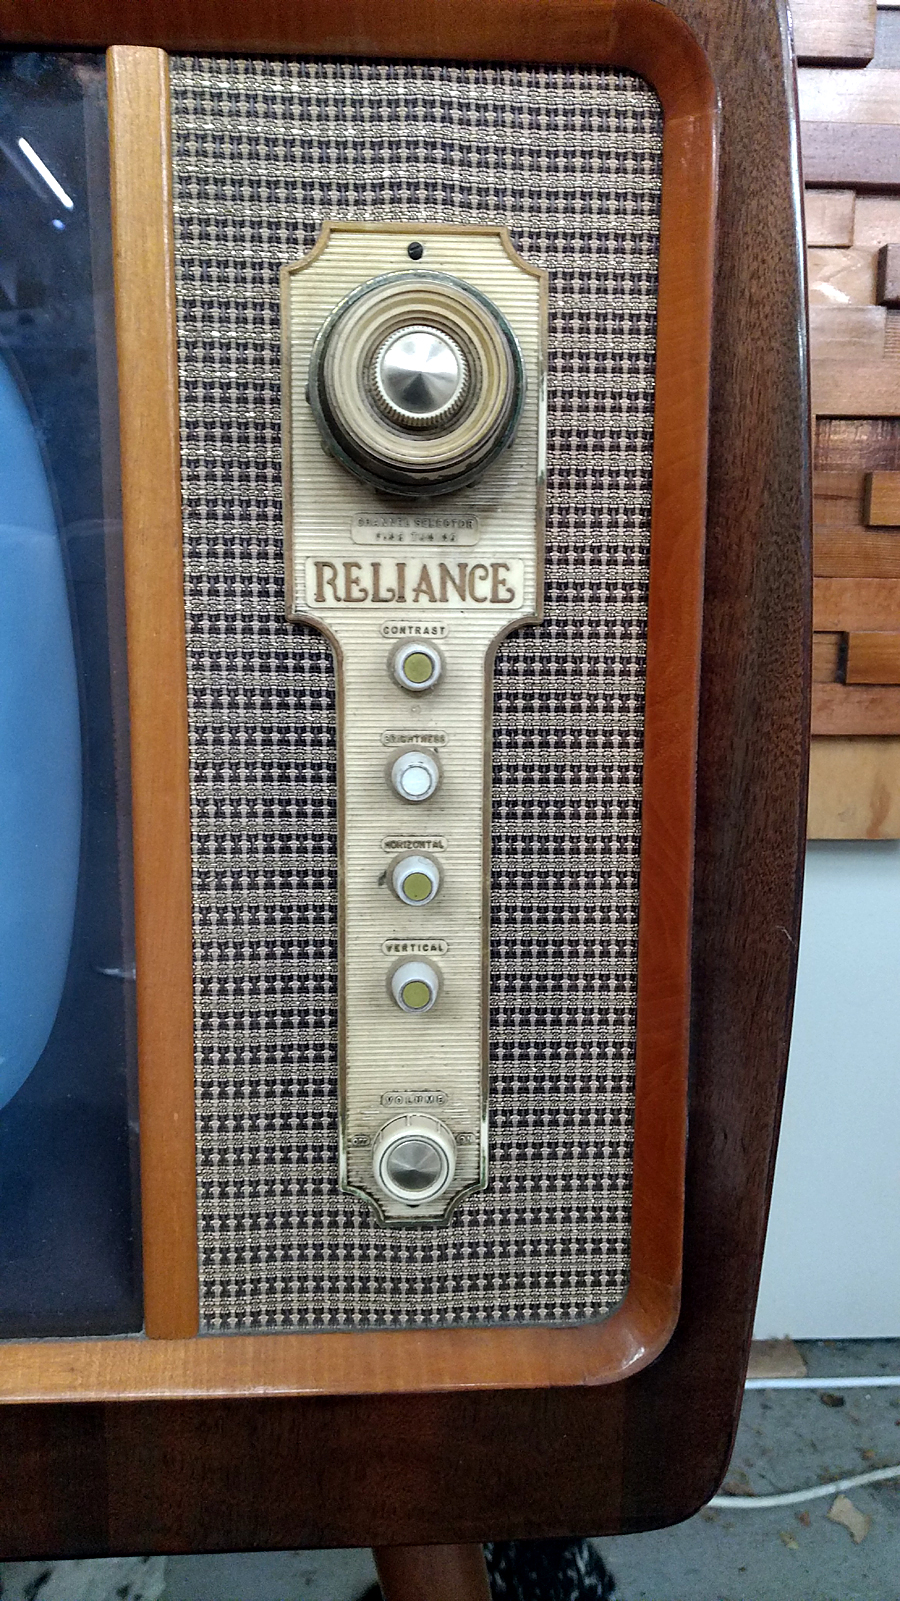 Reliance valve television